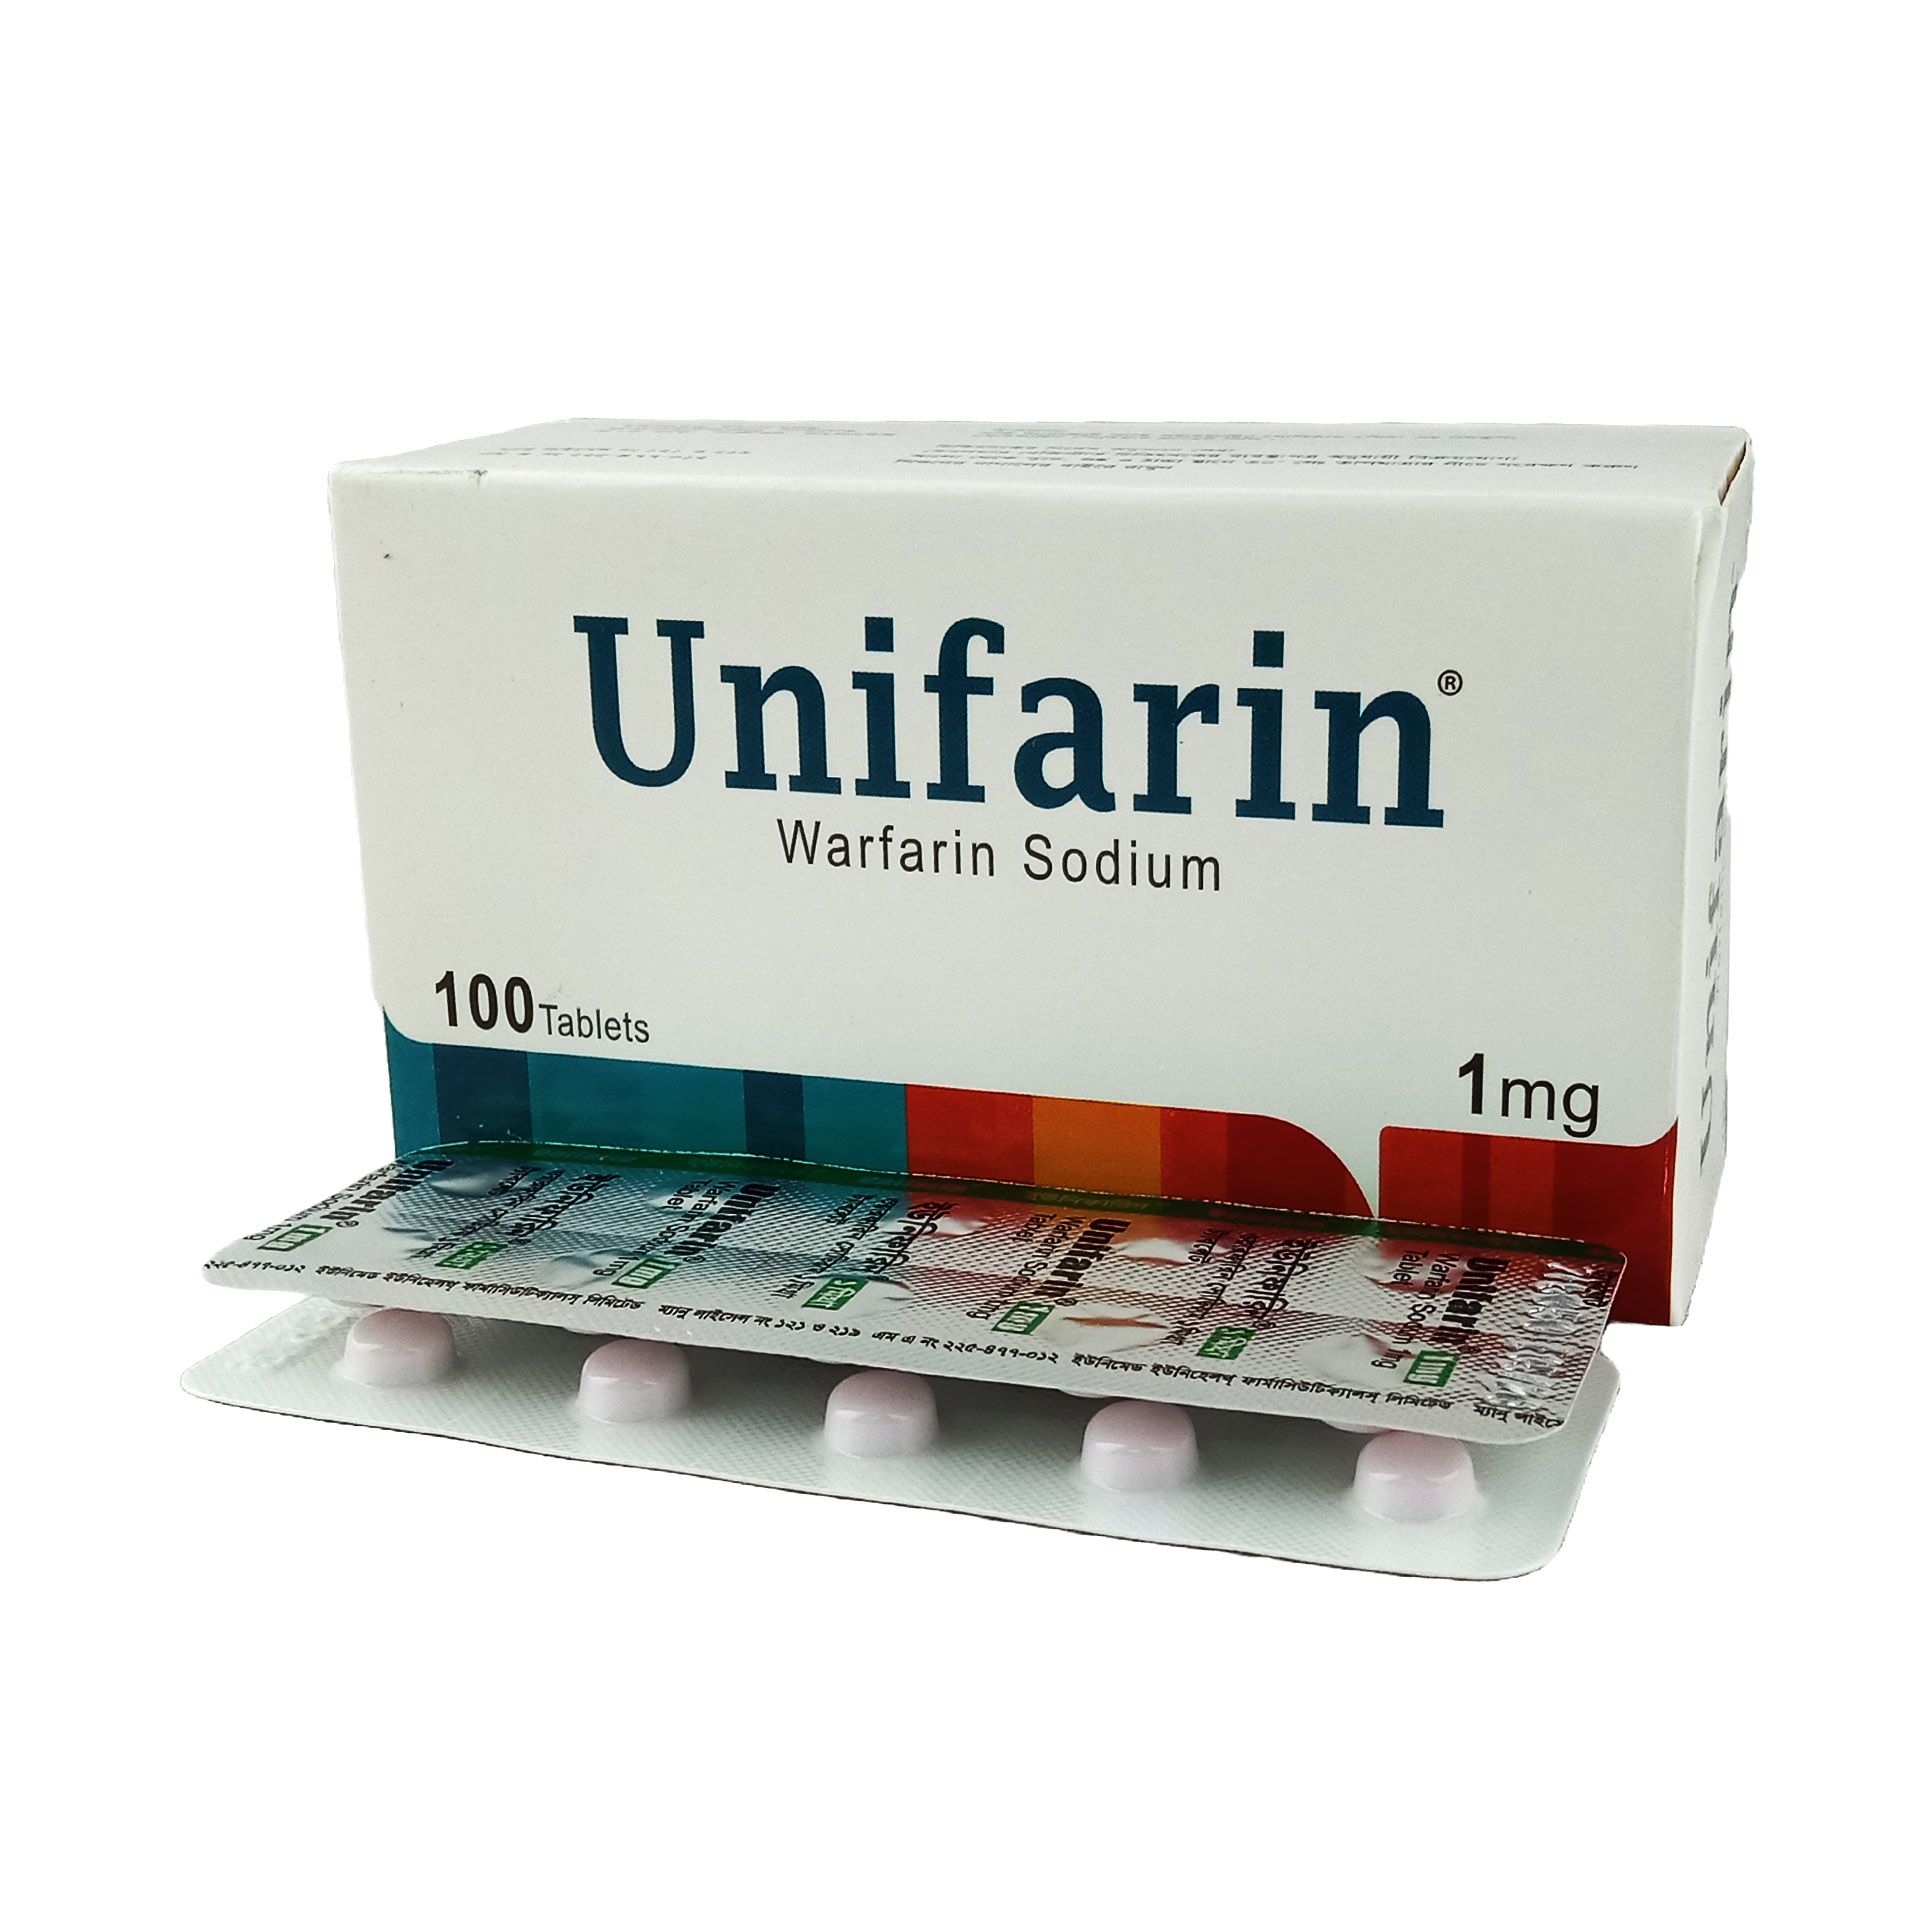 Unifarin 1mg Tablet